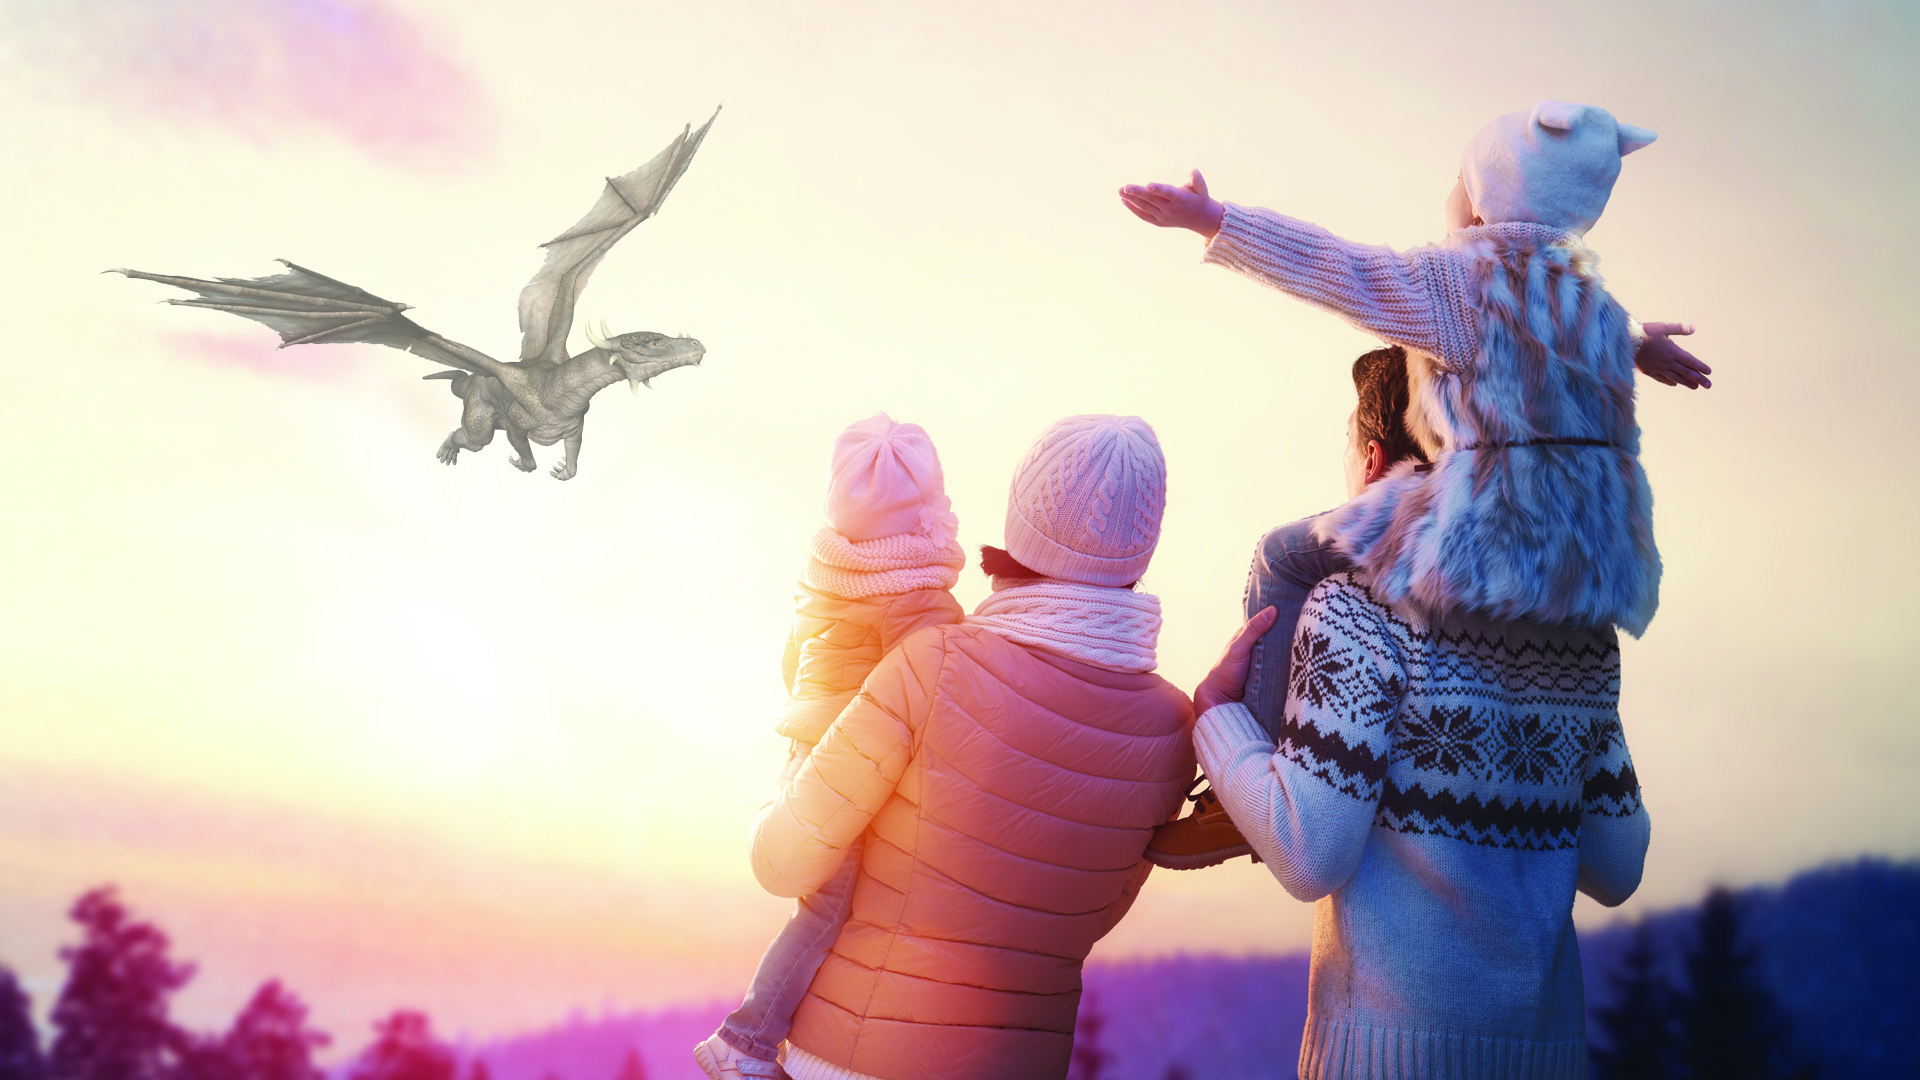 A dragon flies near a family